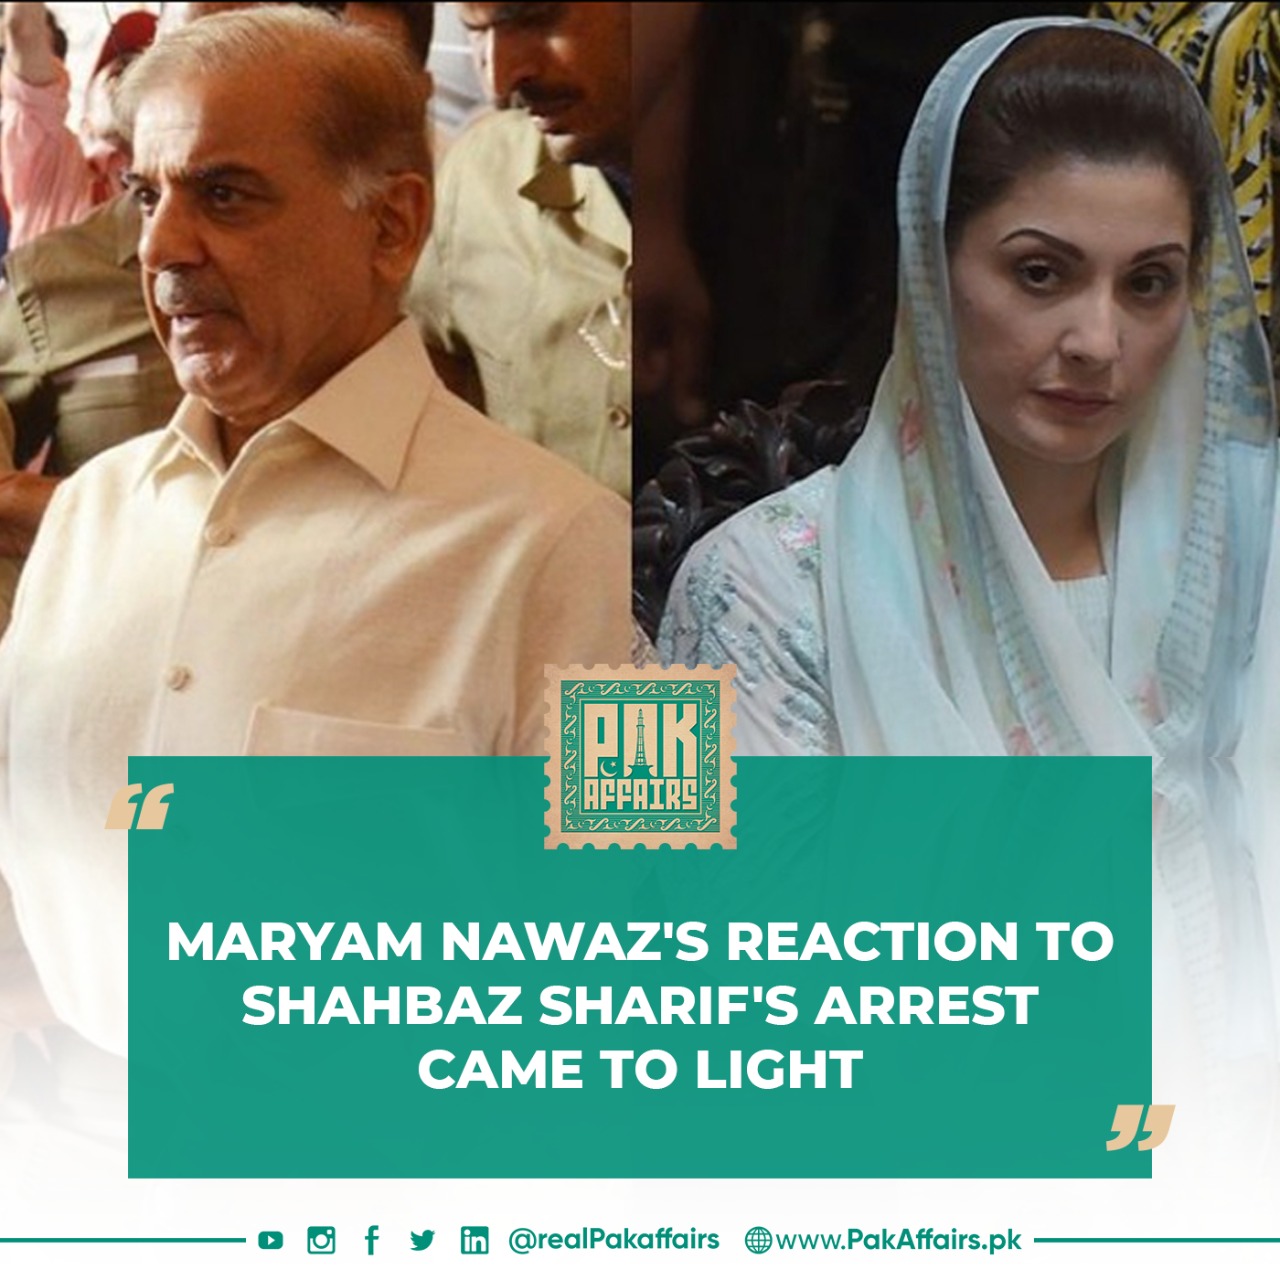 Maryam Nawaz's reaction to Shahbaz Sharif's arrest came to light